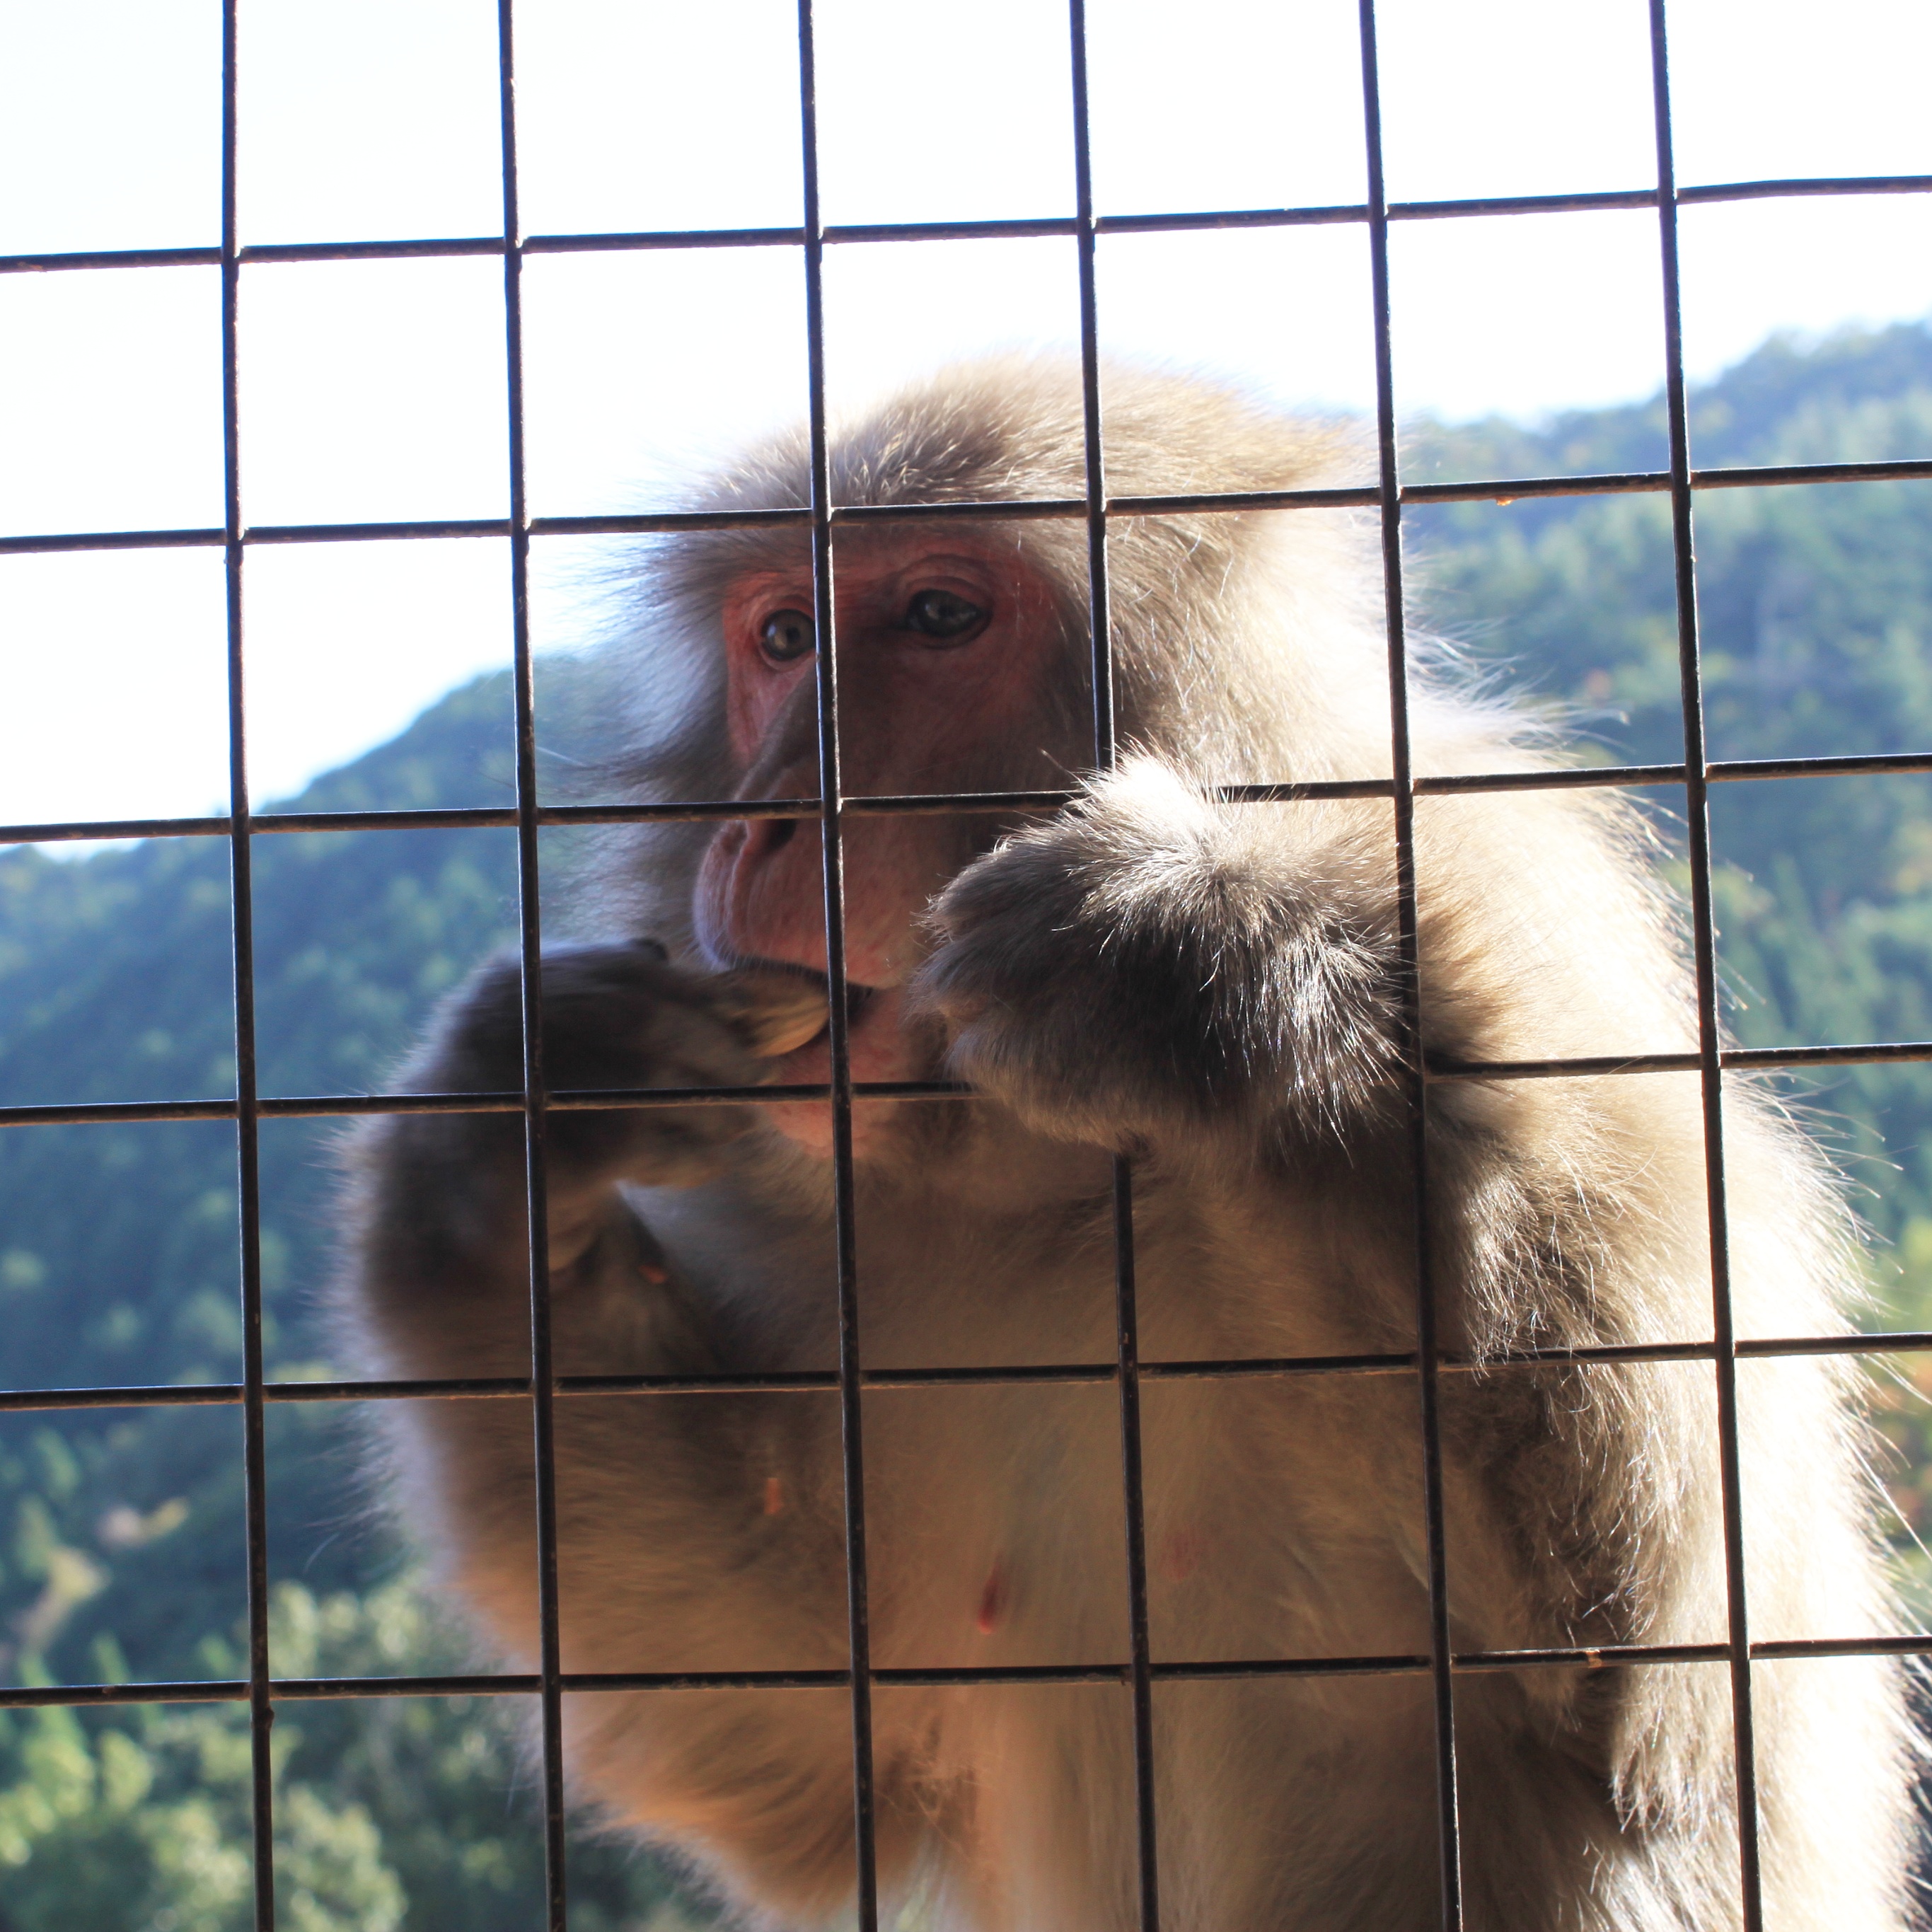 Arashiyama Monkey Park